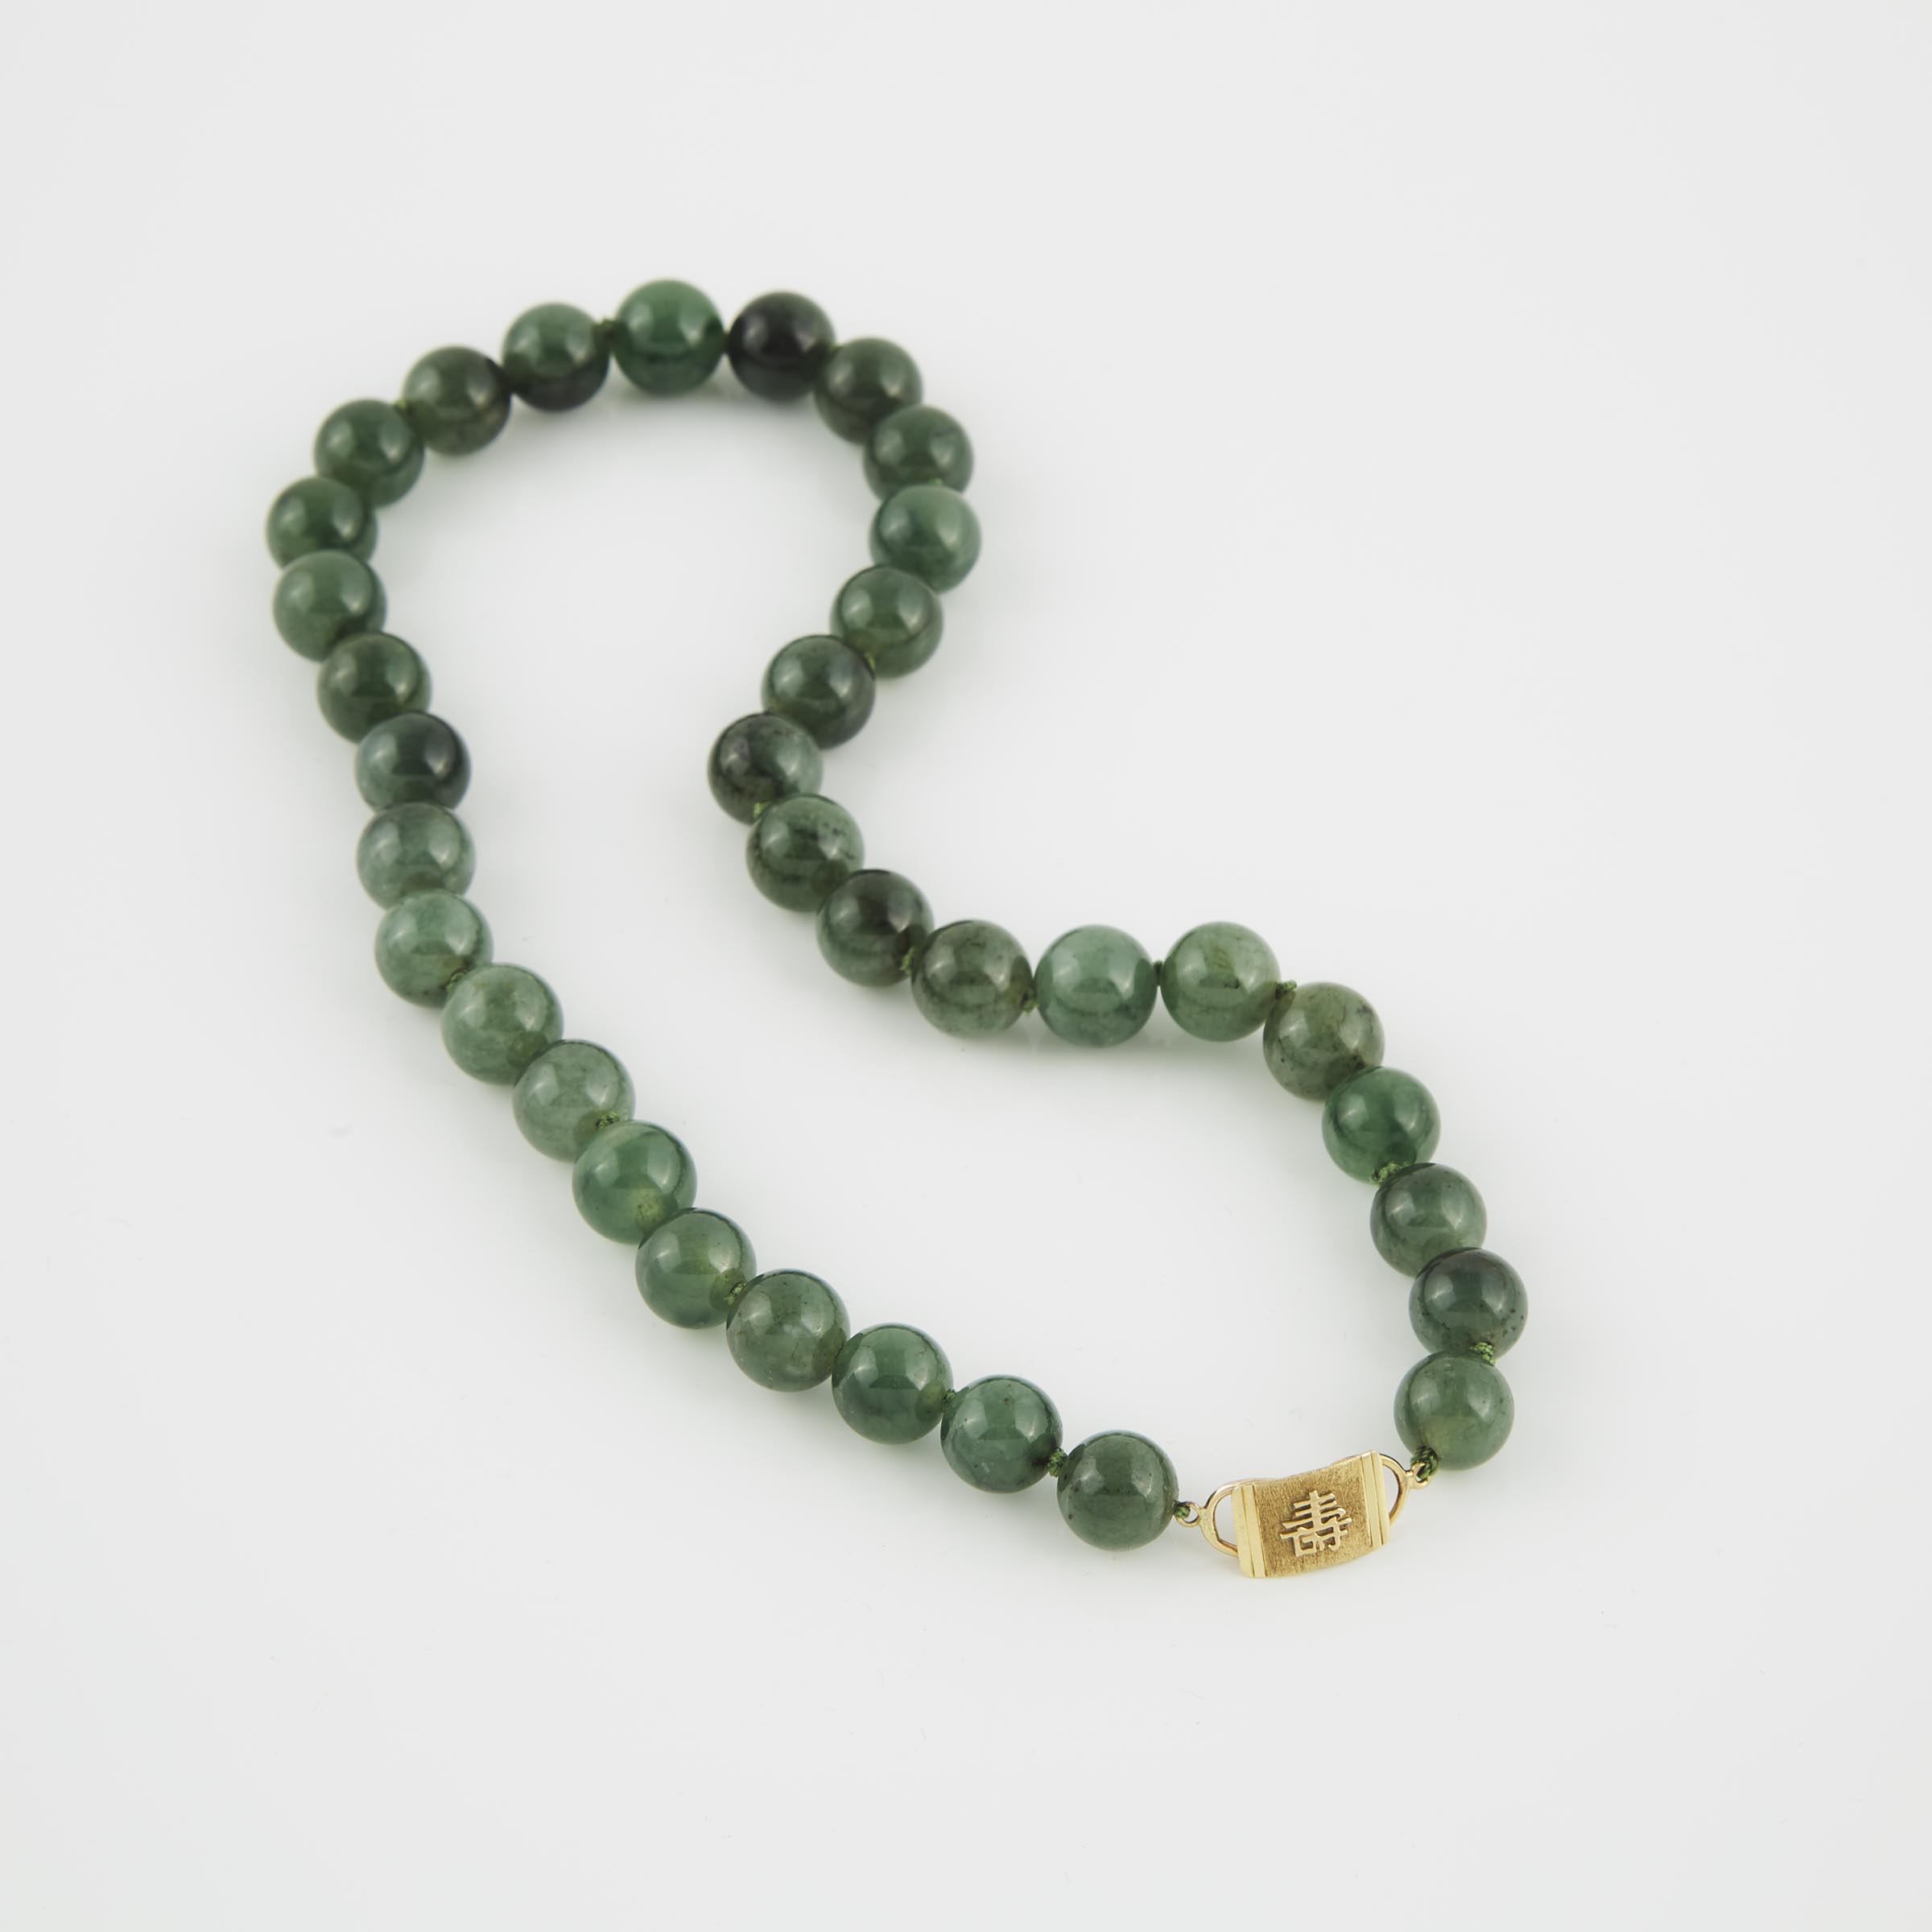 Ming's Single Strand Of Nephrite Beads